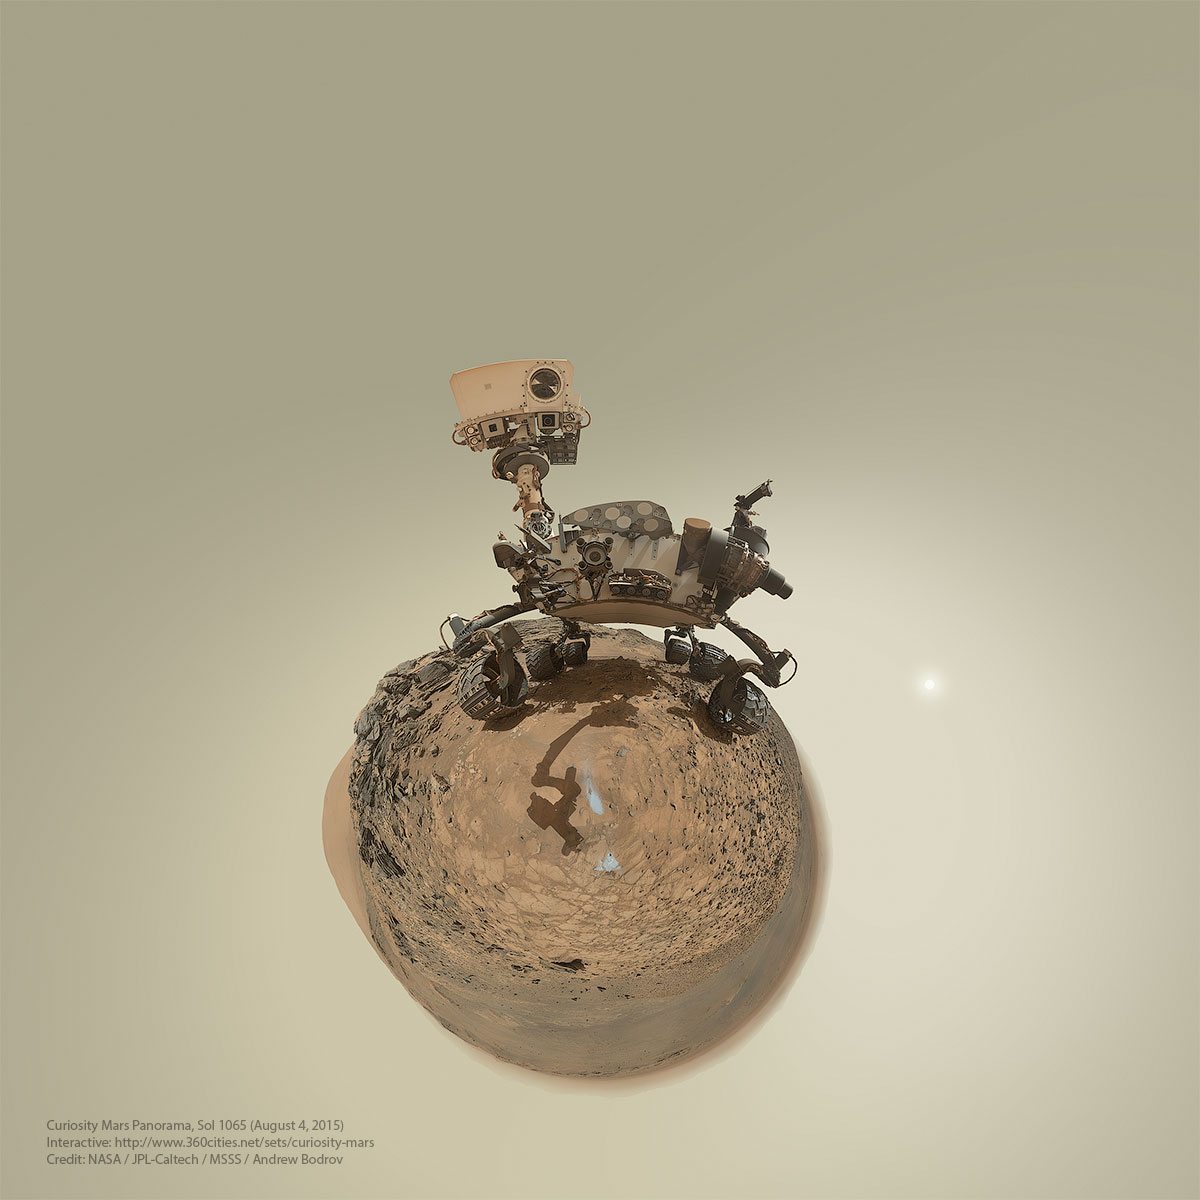 planet_curiosity_sol-1065.jpg